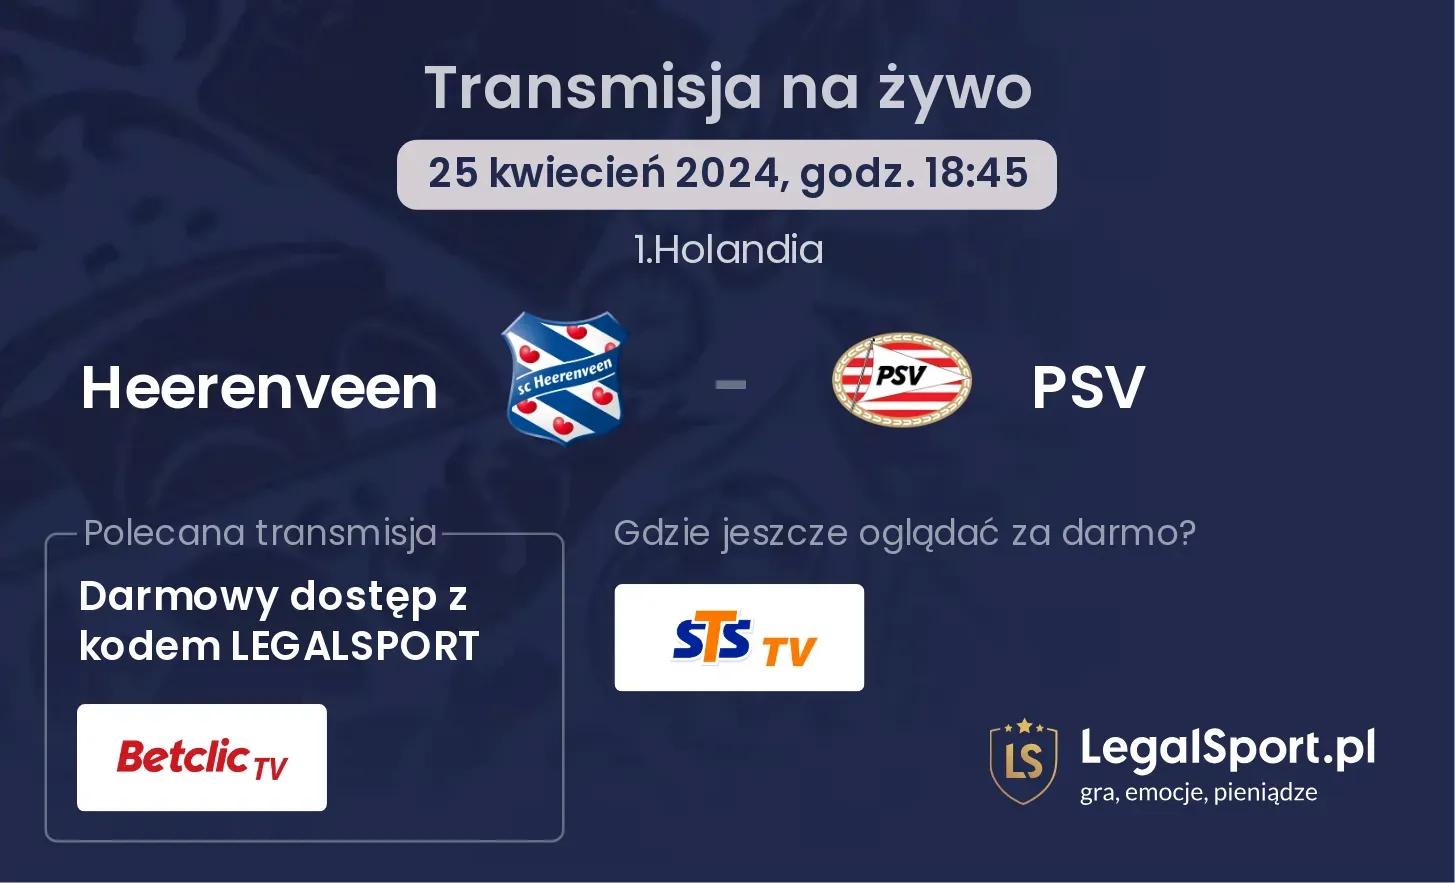 Heerenveen - PSV transmisja na żywo